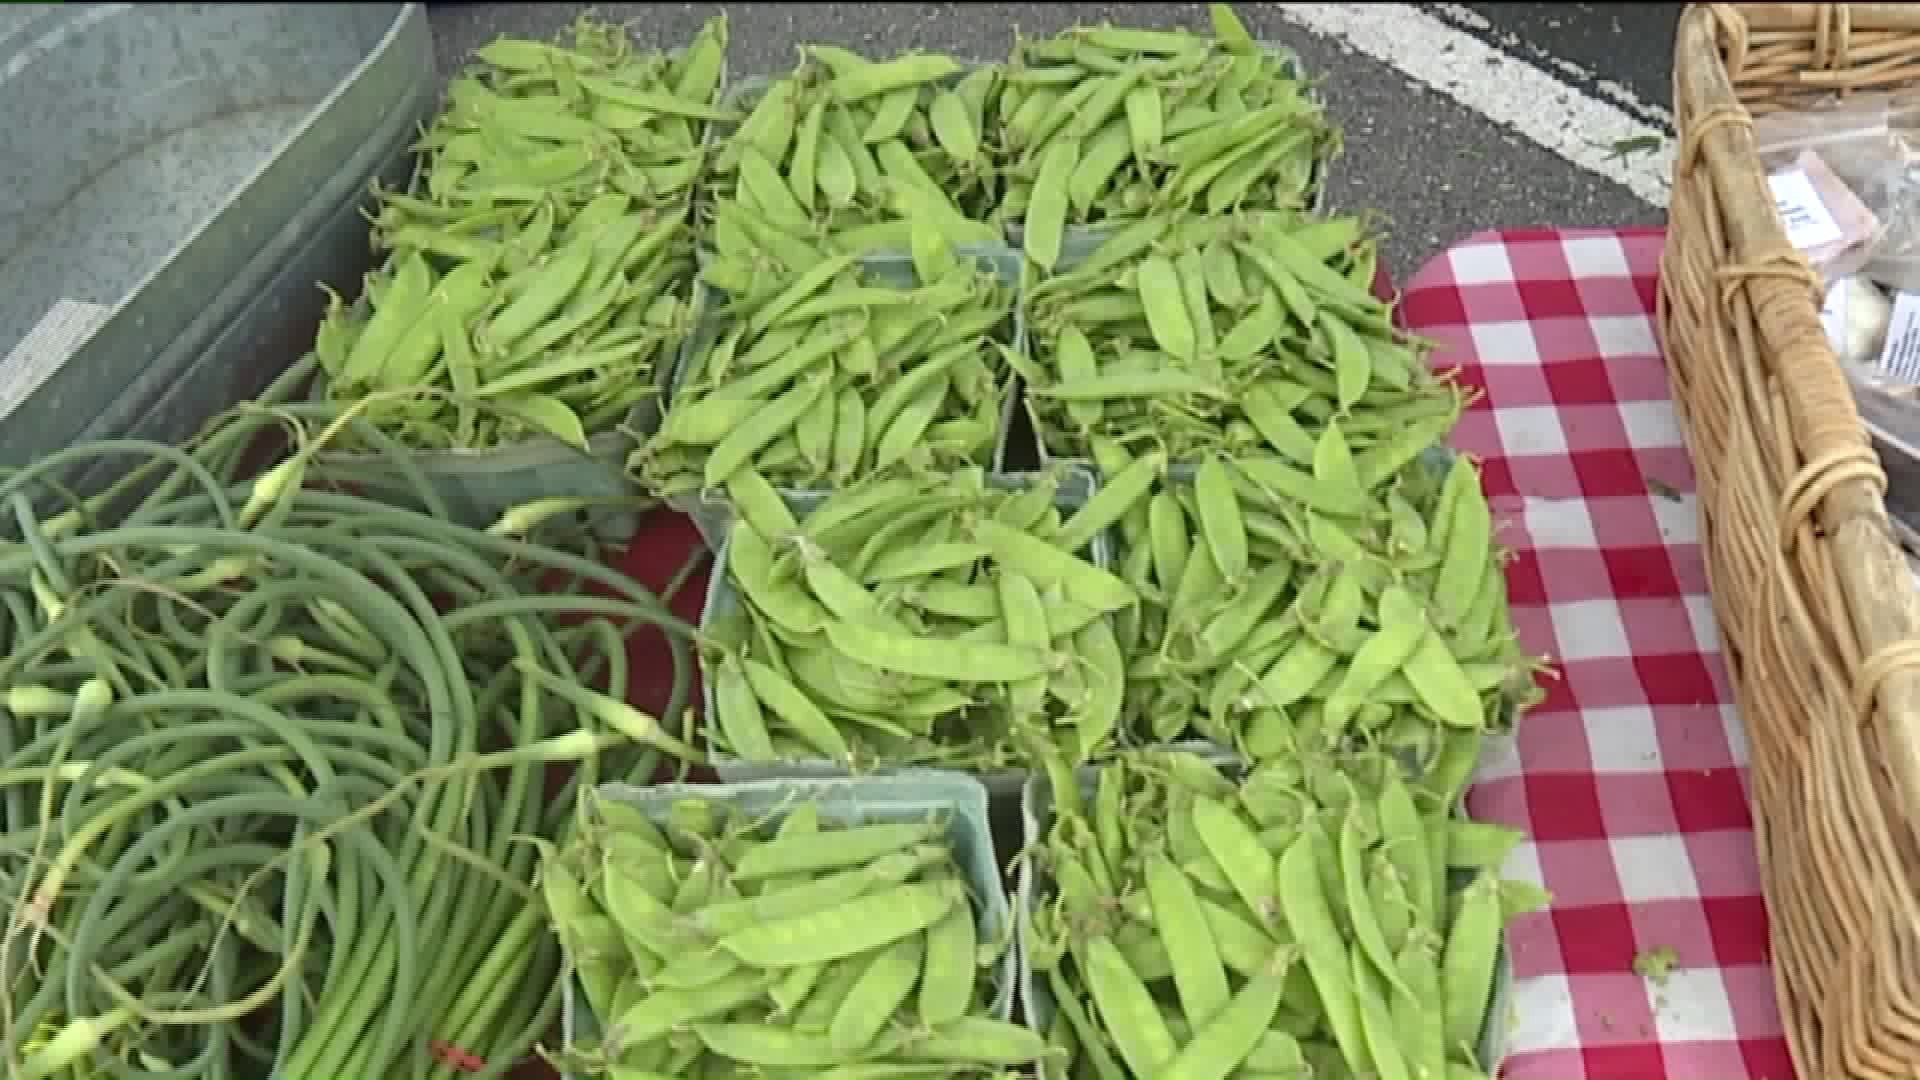 Farmers Market Comes to Lehighton